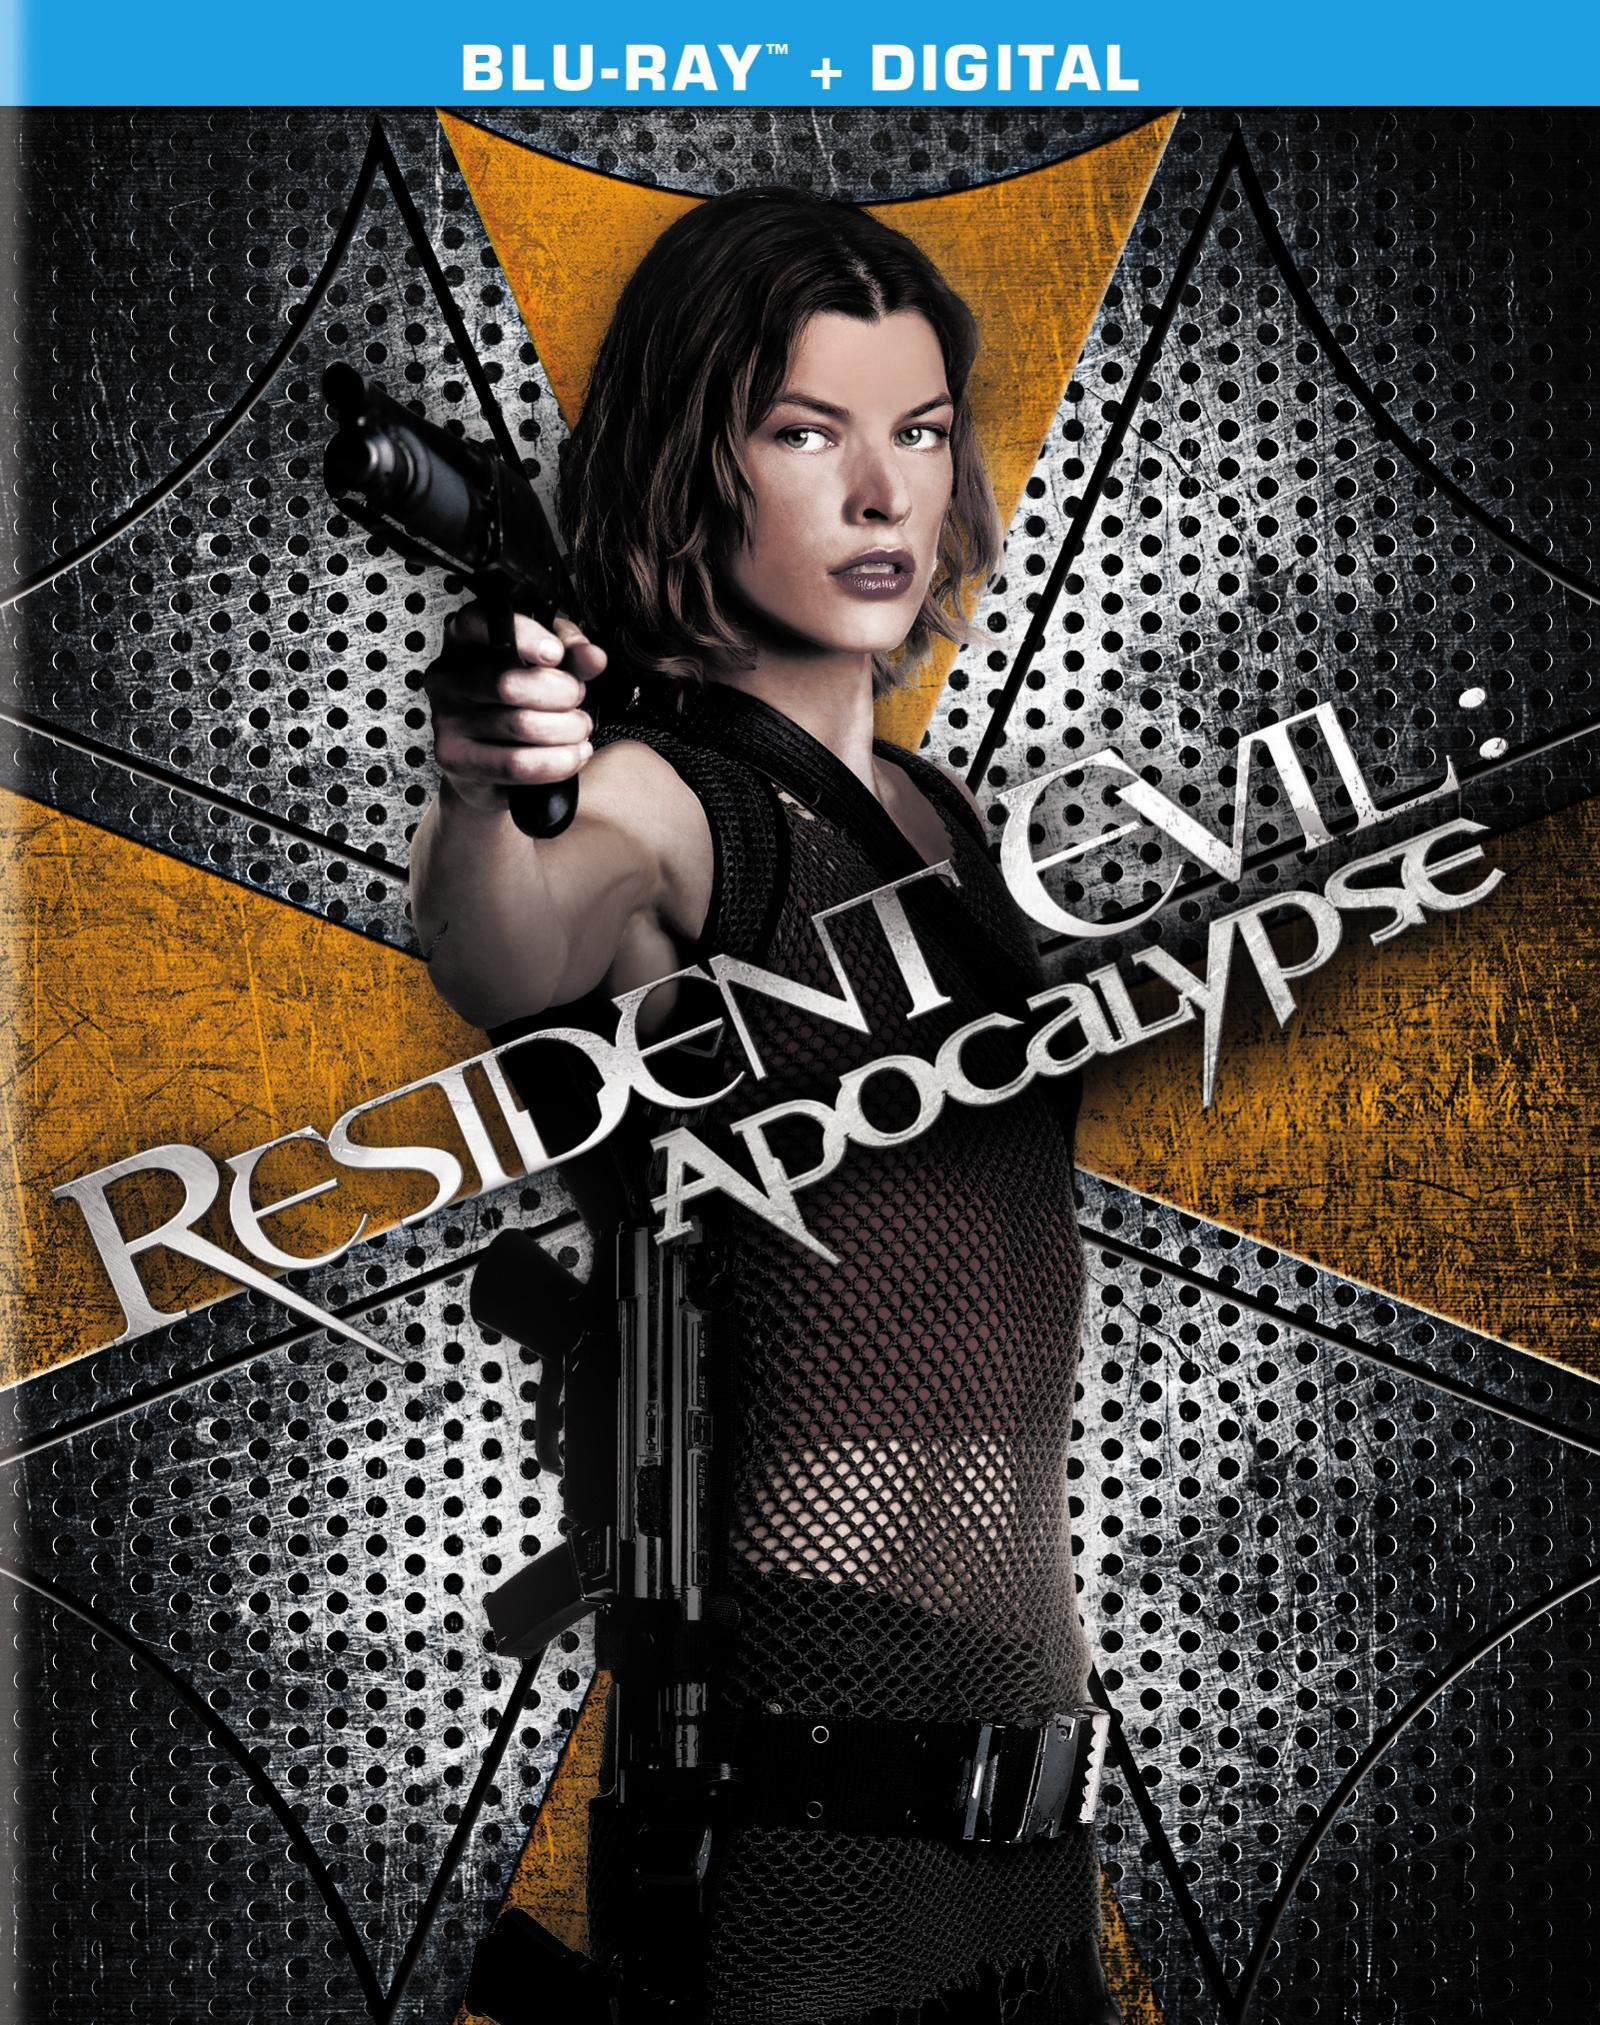 Resident Evil movies: Resident Evil (2002) Apocalypse (2004